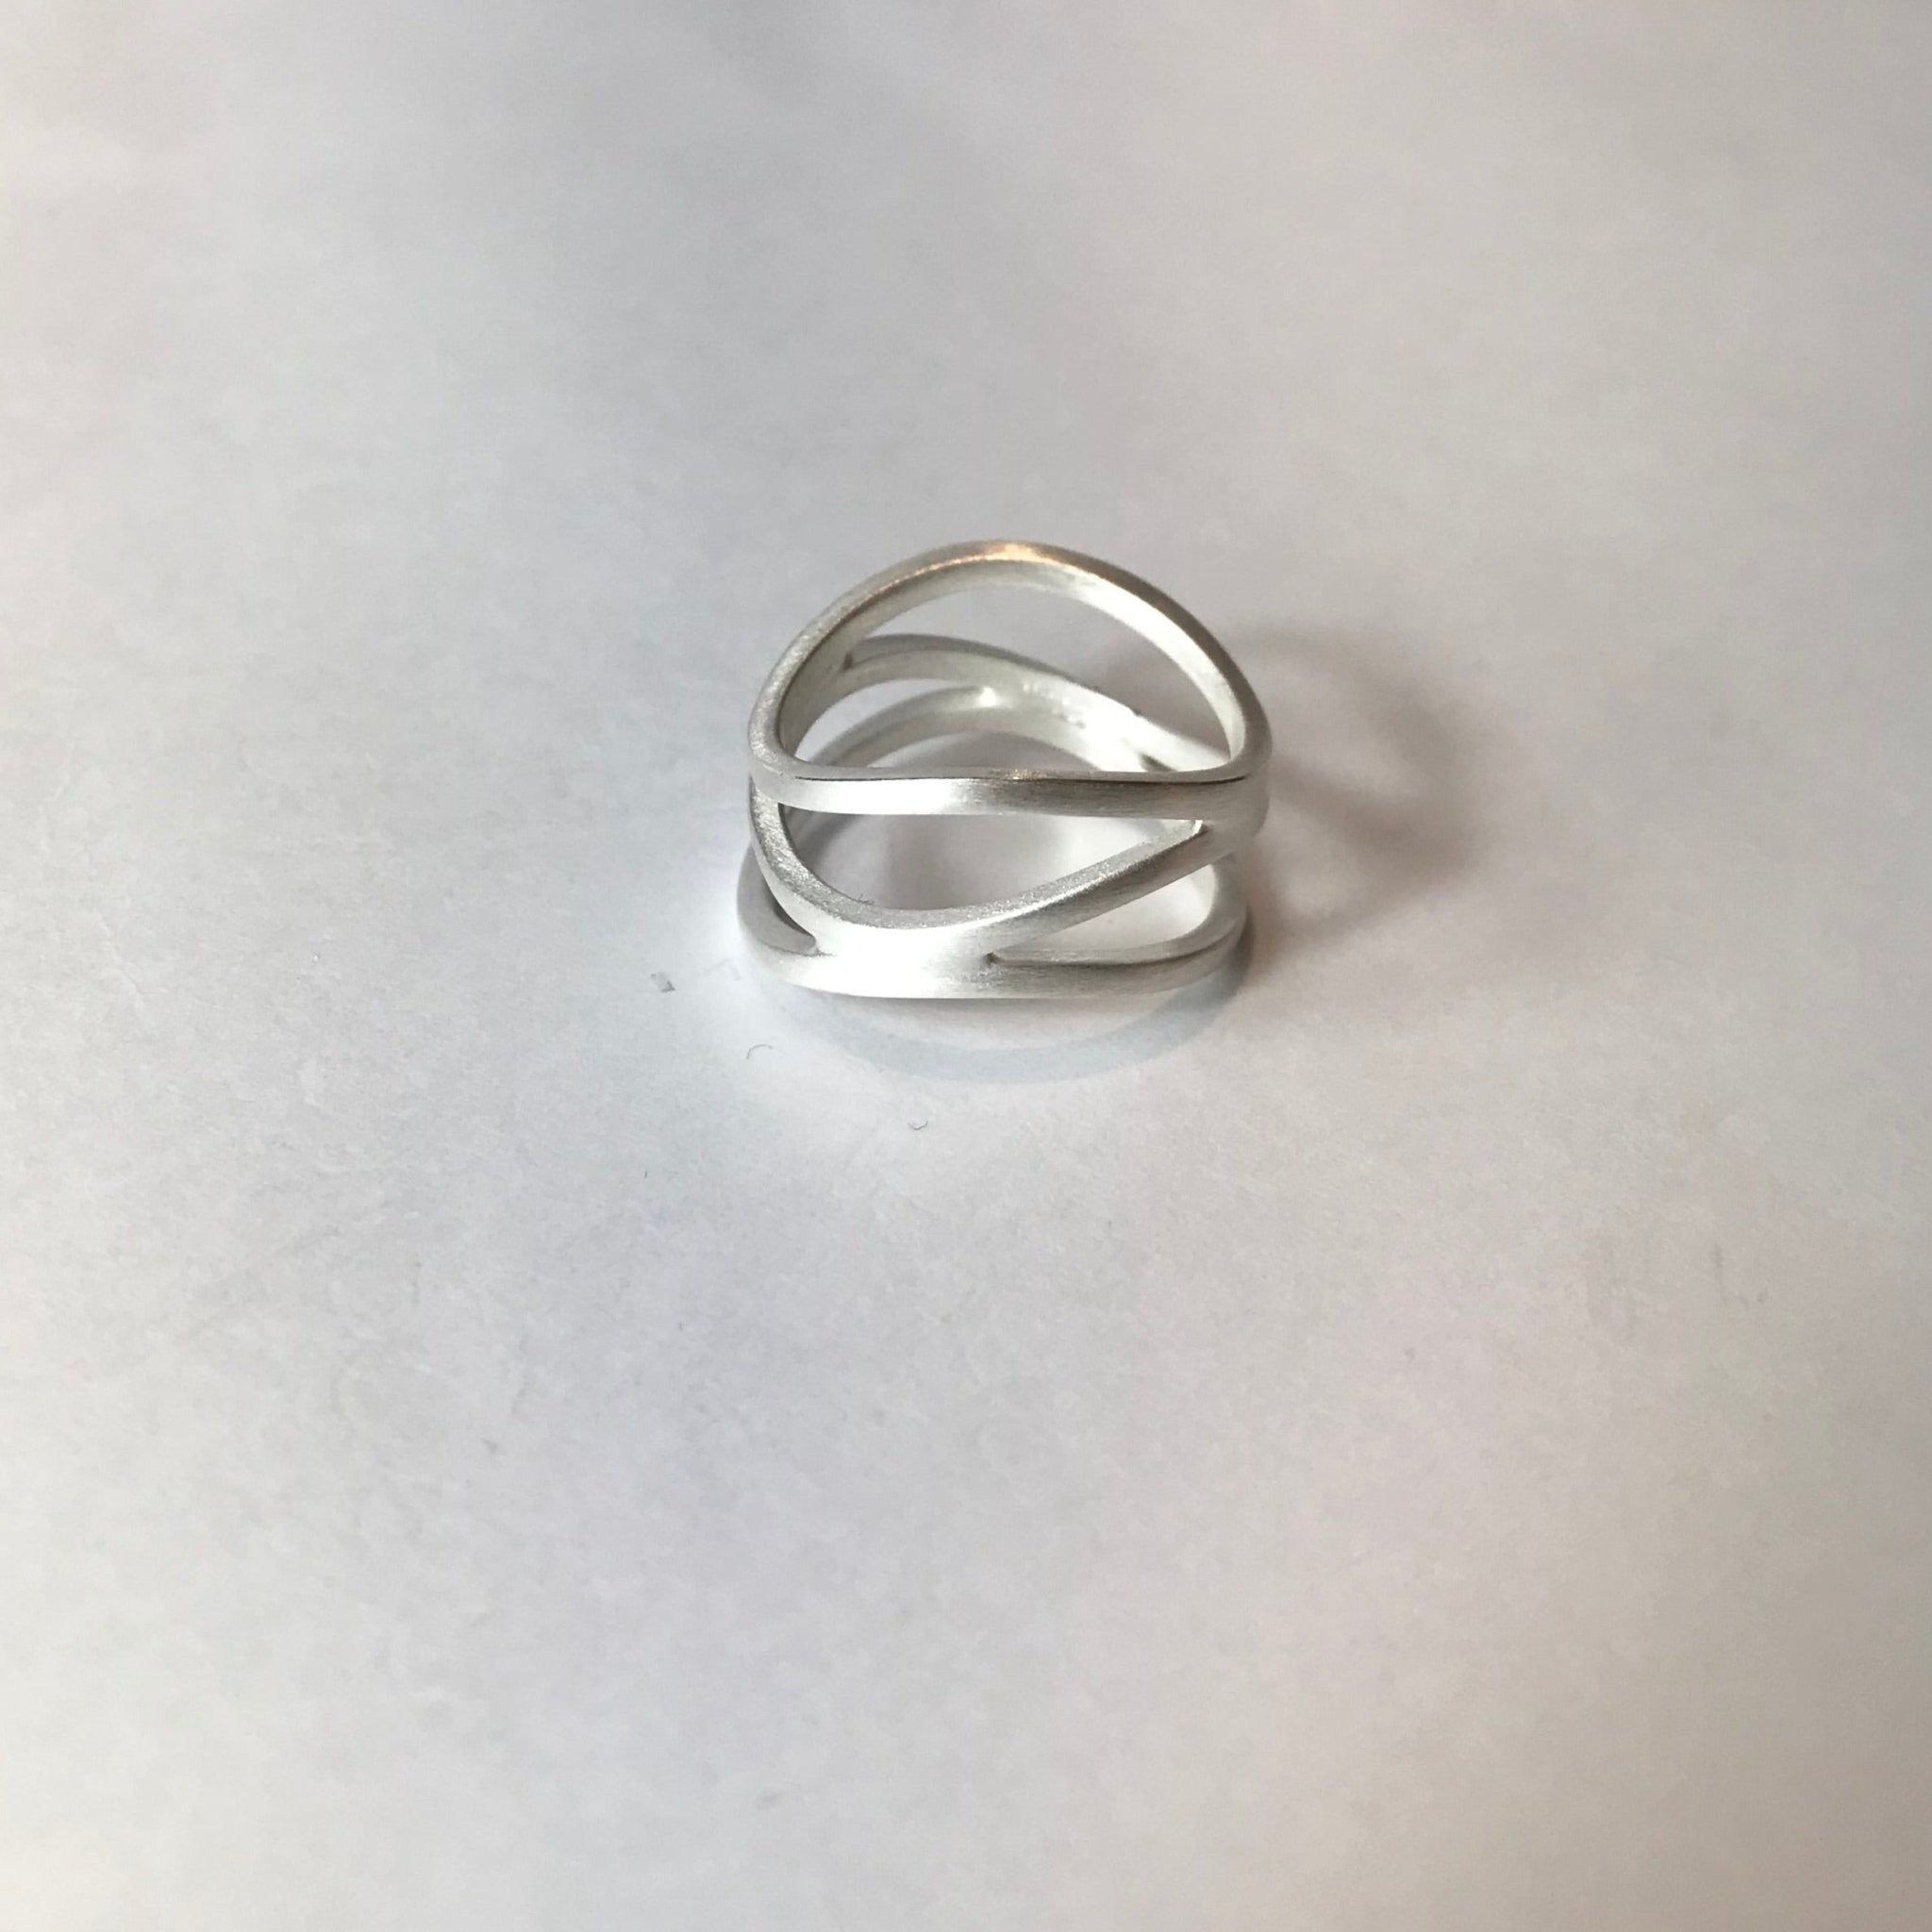 Silver Ring - The Nancy Smillie Shop - Art, Jewellery & Designer Gifts Glasgow